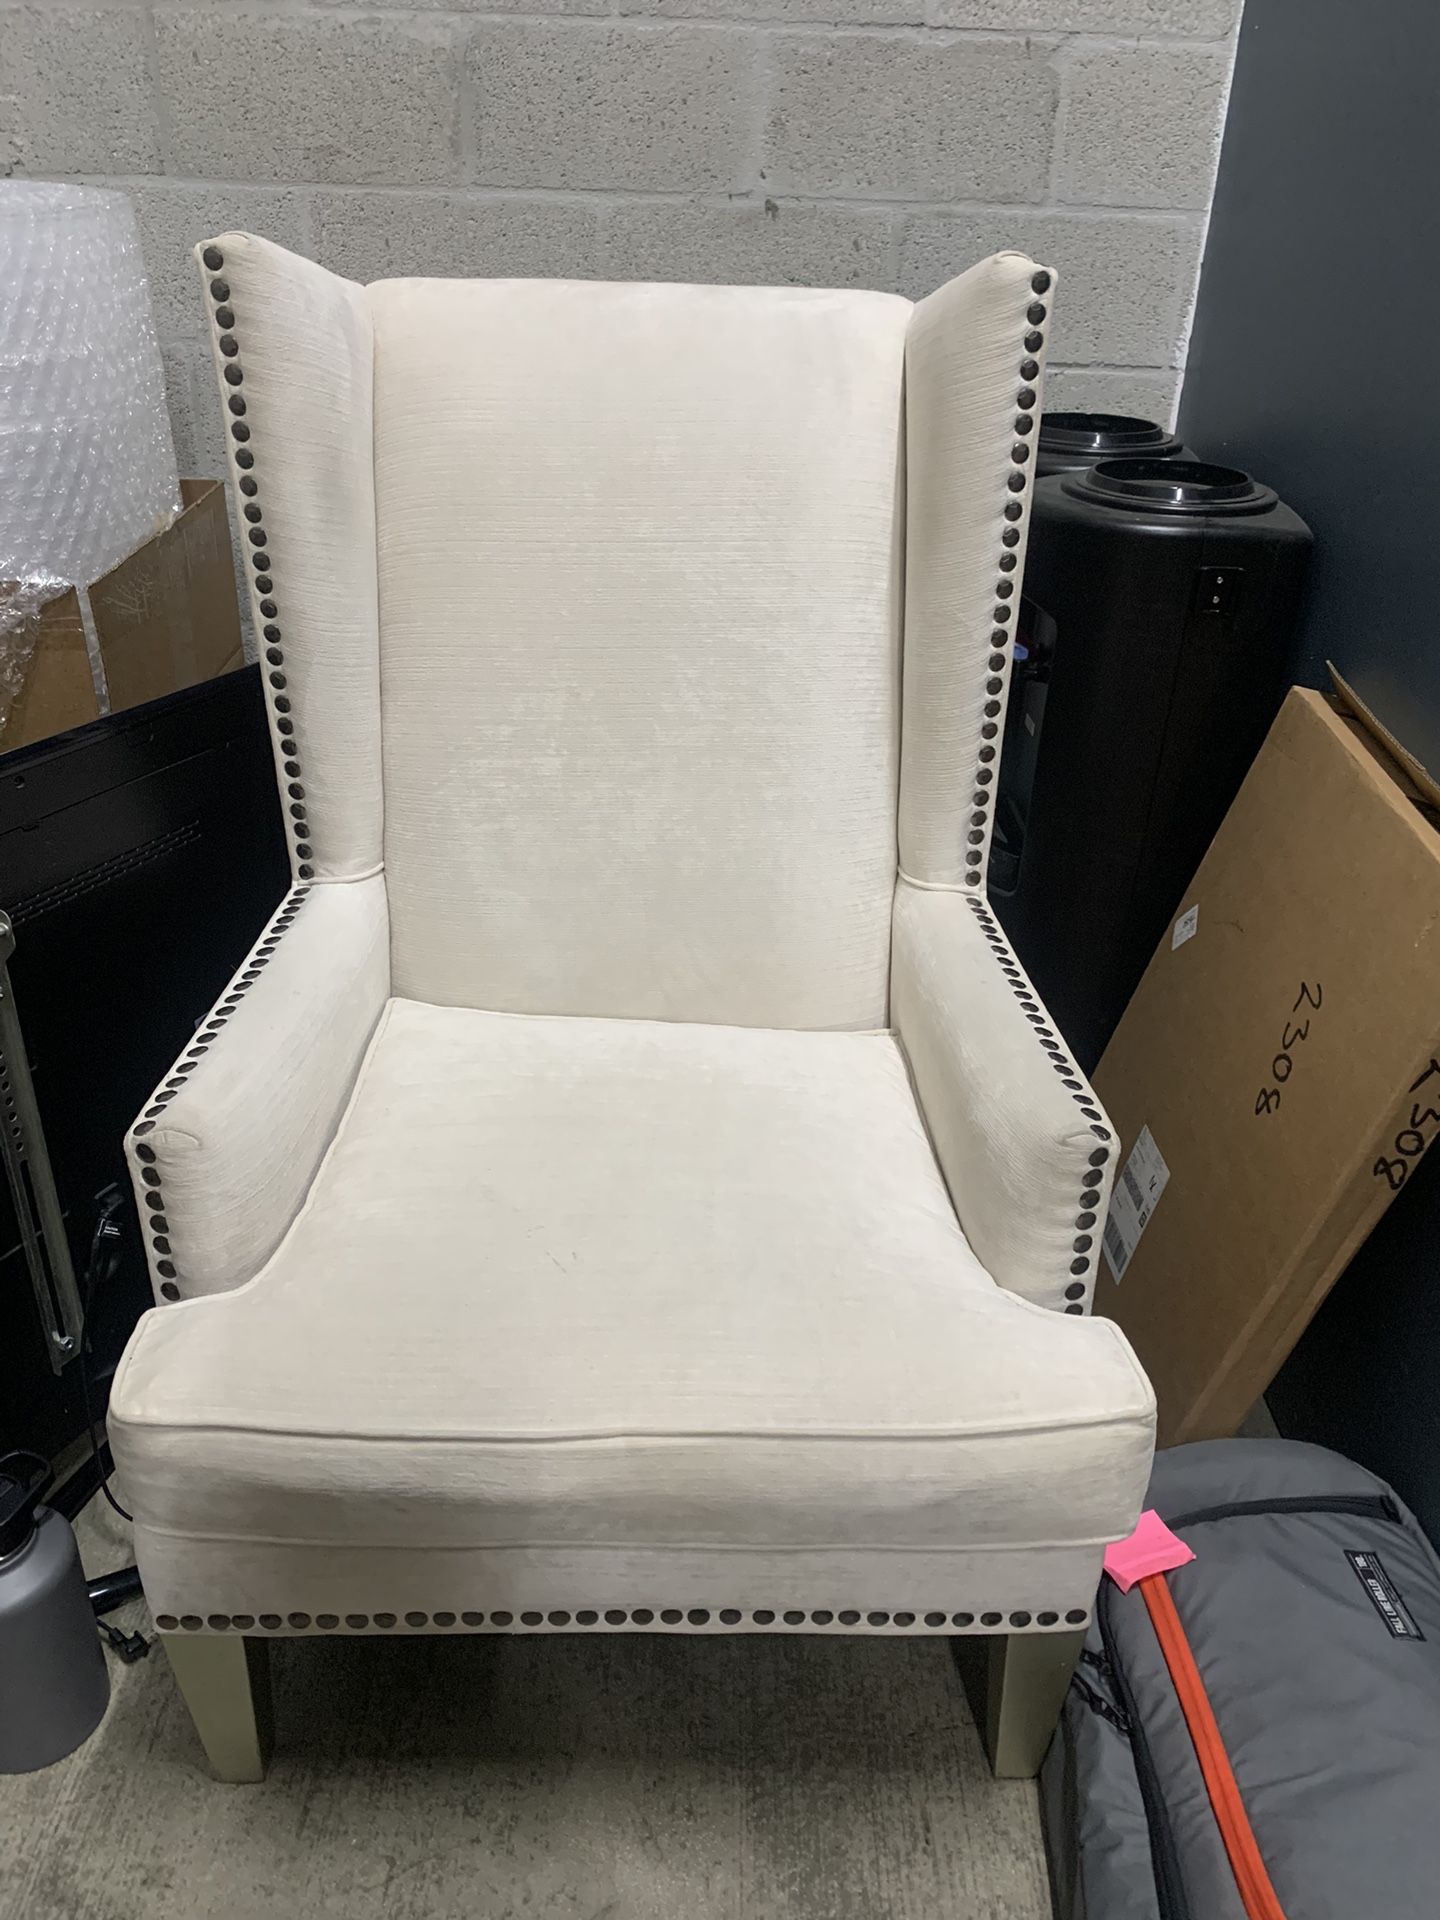 Queen Chair 